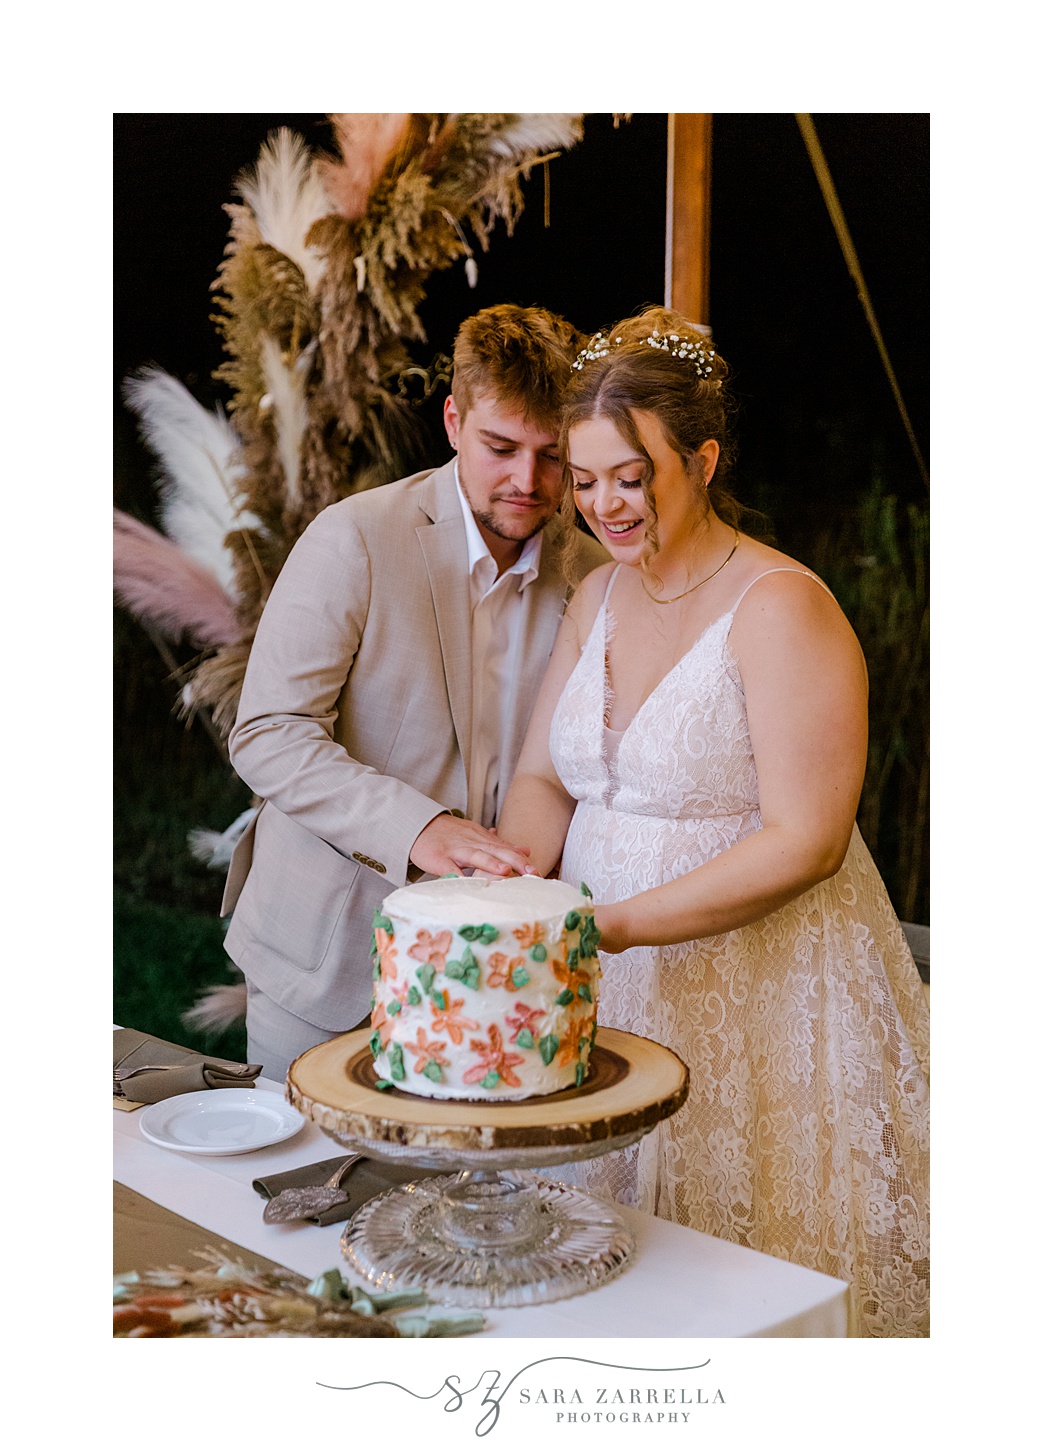 bride and groom cut cake at Rhode Island wedding reception